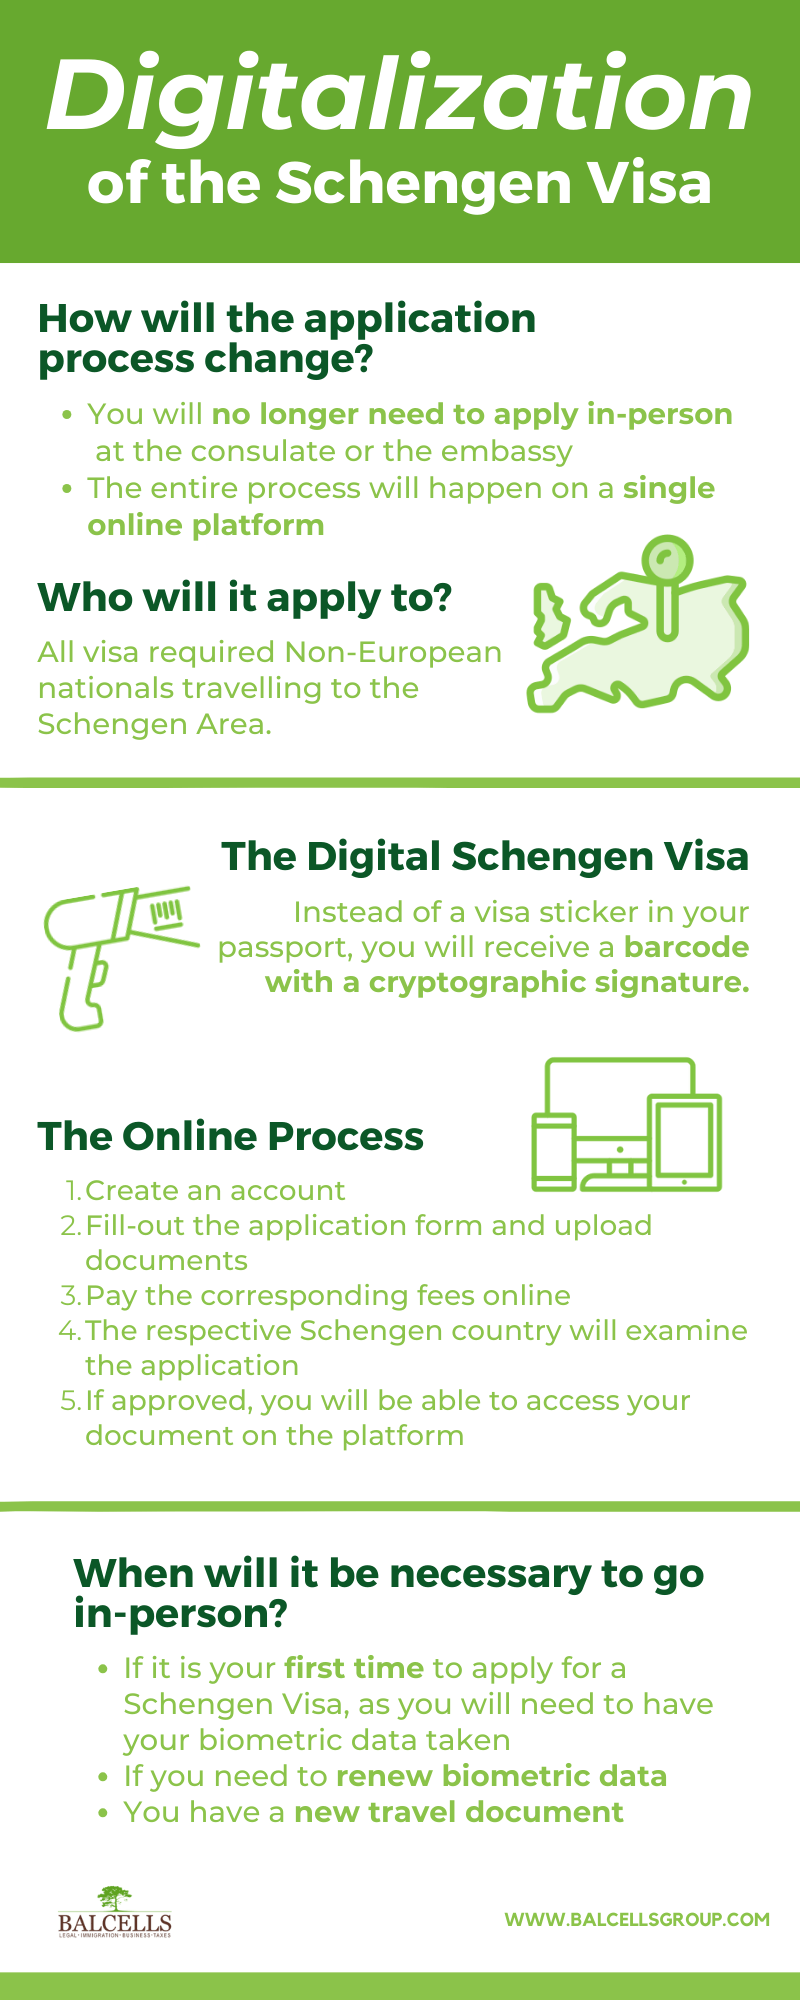 The Digitalization of Schengen Visas